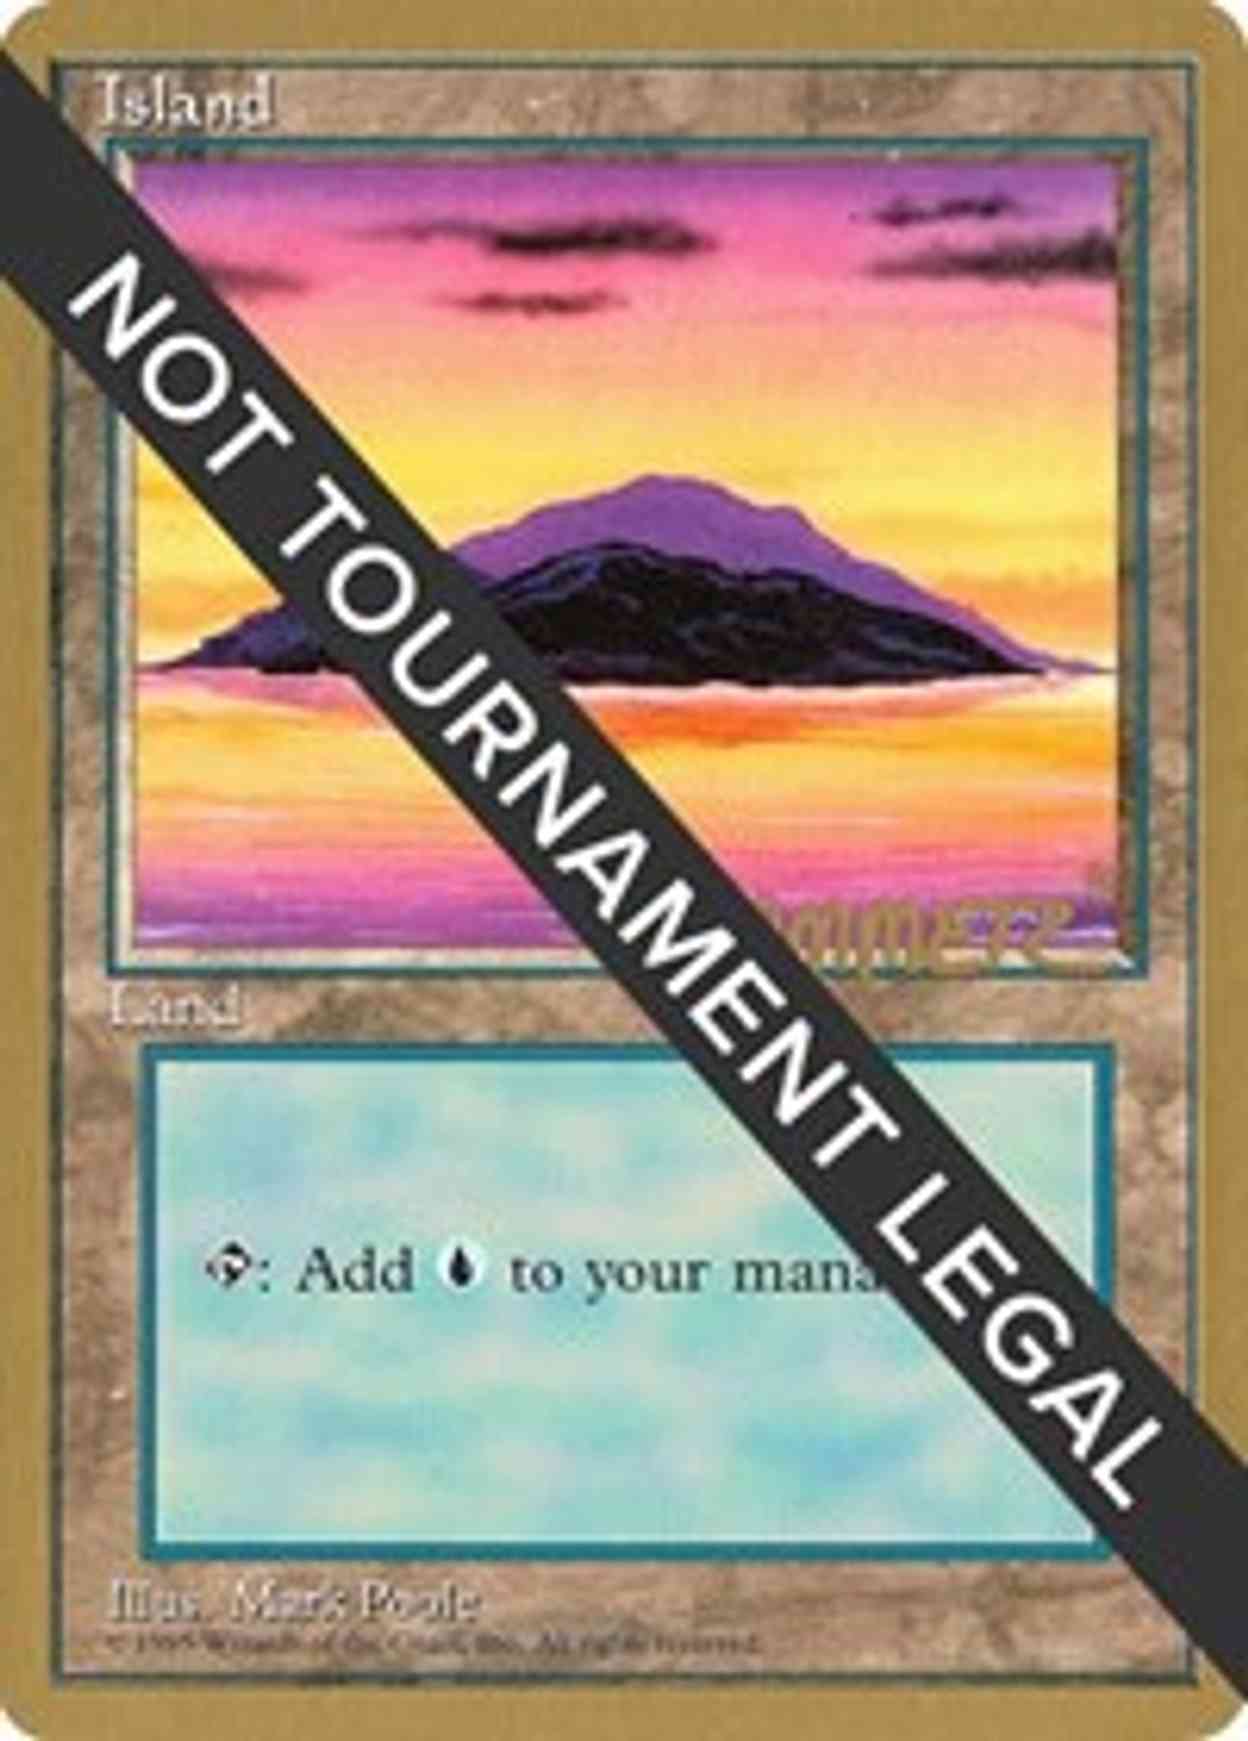 Island (A) - 1996 Shawn "Hammer" Regnier (4ED) magic card front